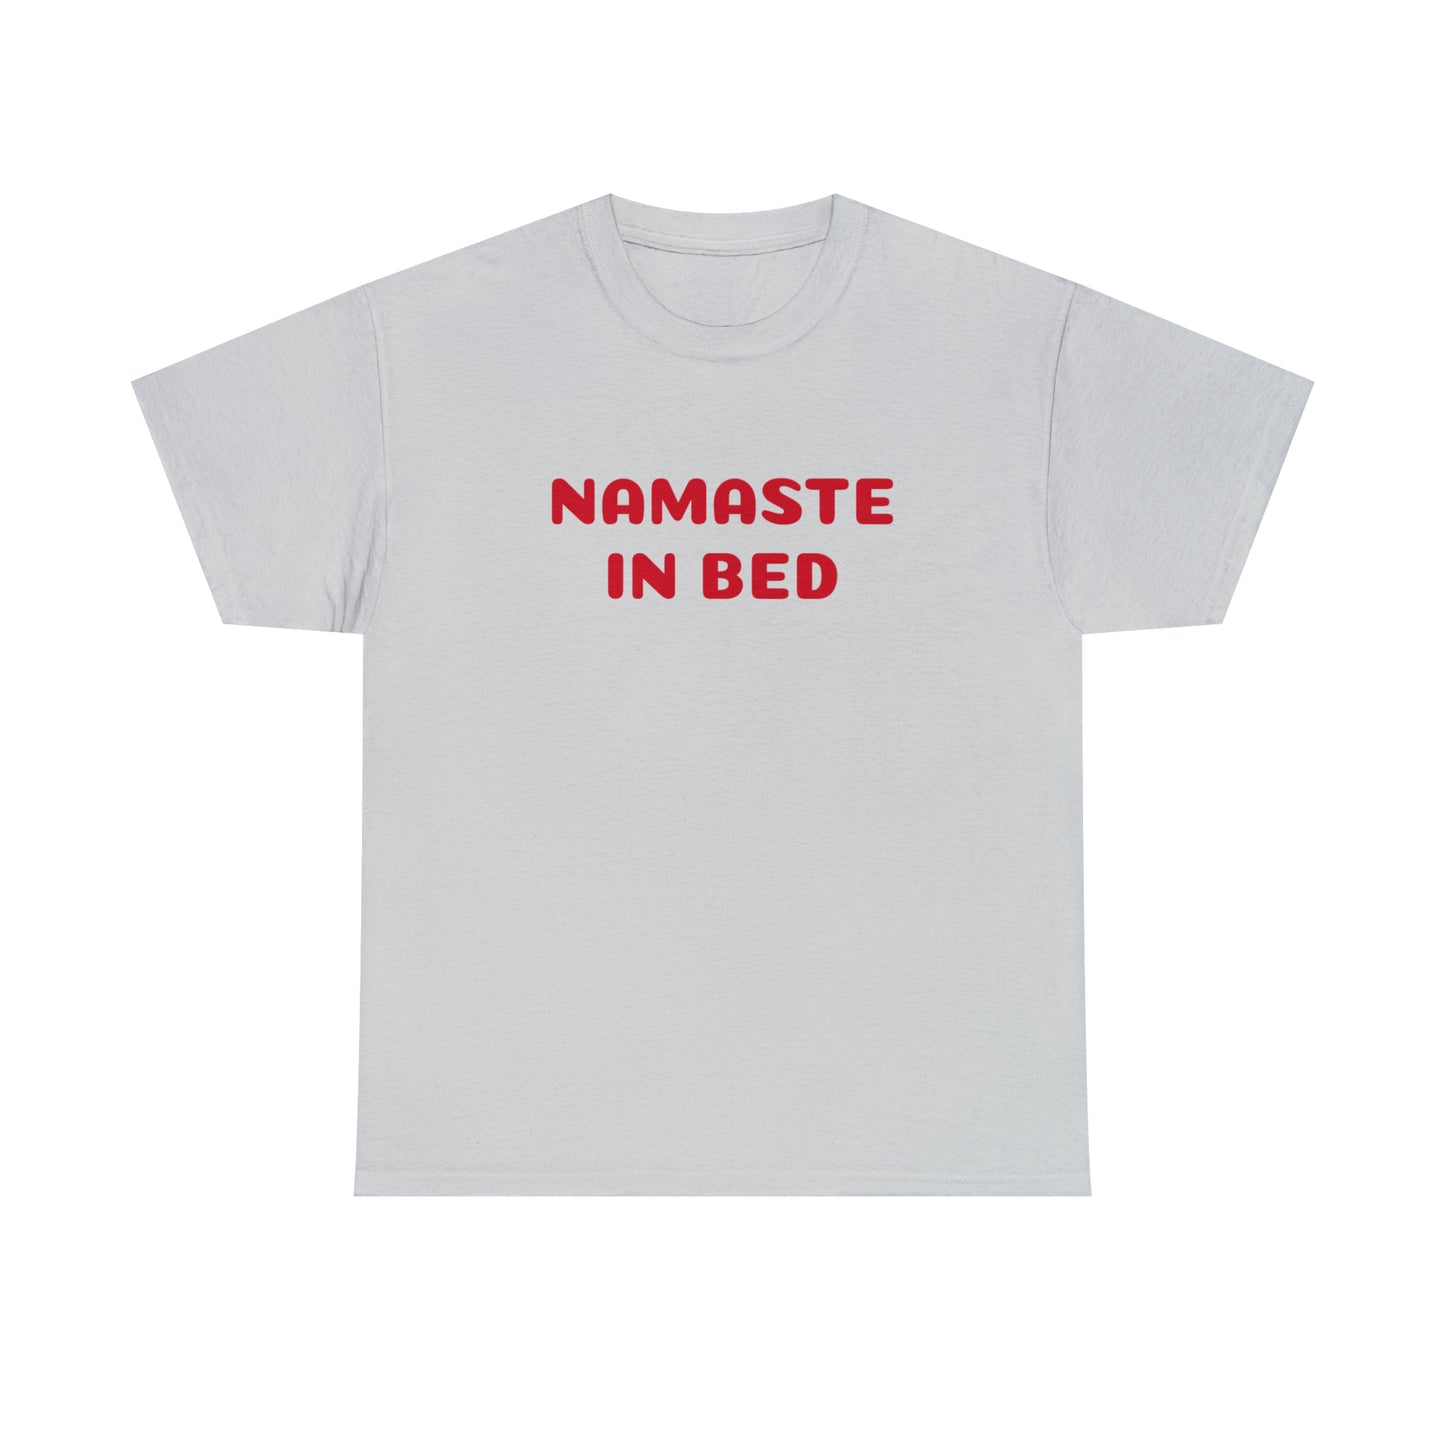 Custom Parody T-shirt, Namaste in bed shirt design